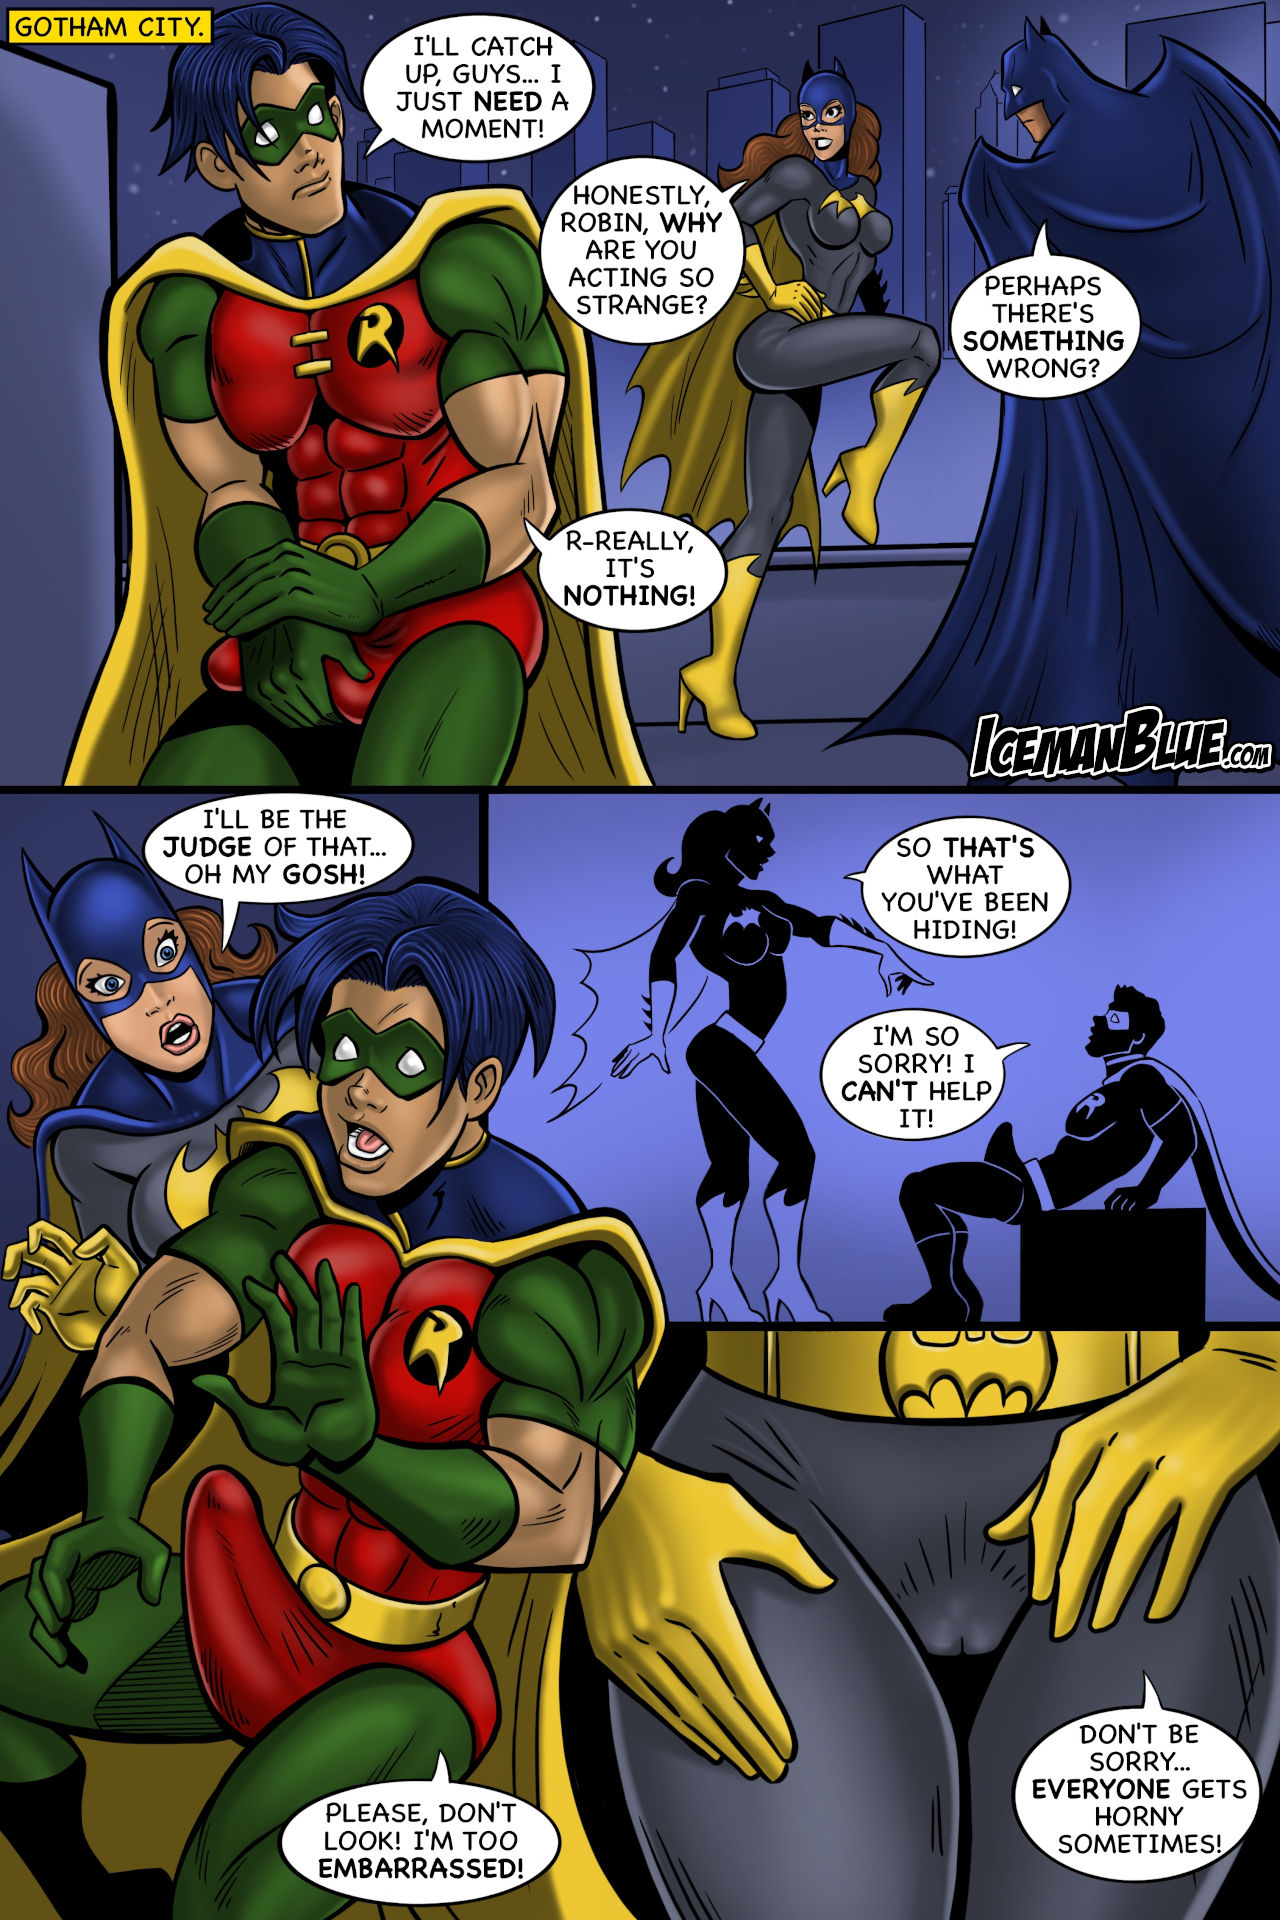 Robin And Batgirl Sex - Batgirl- Iceman Blue - Porn Cartoon Comics